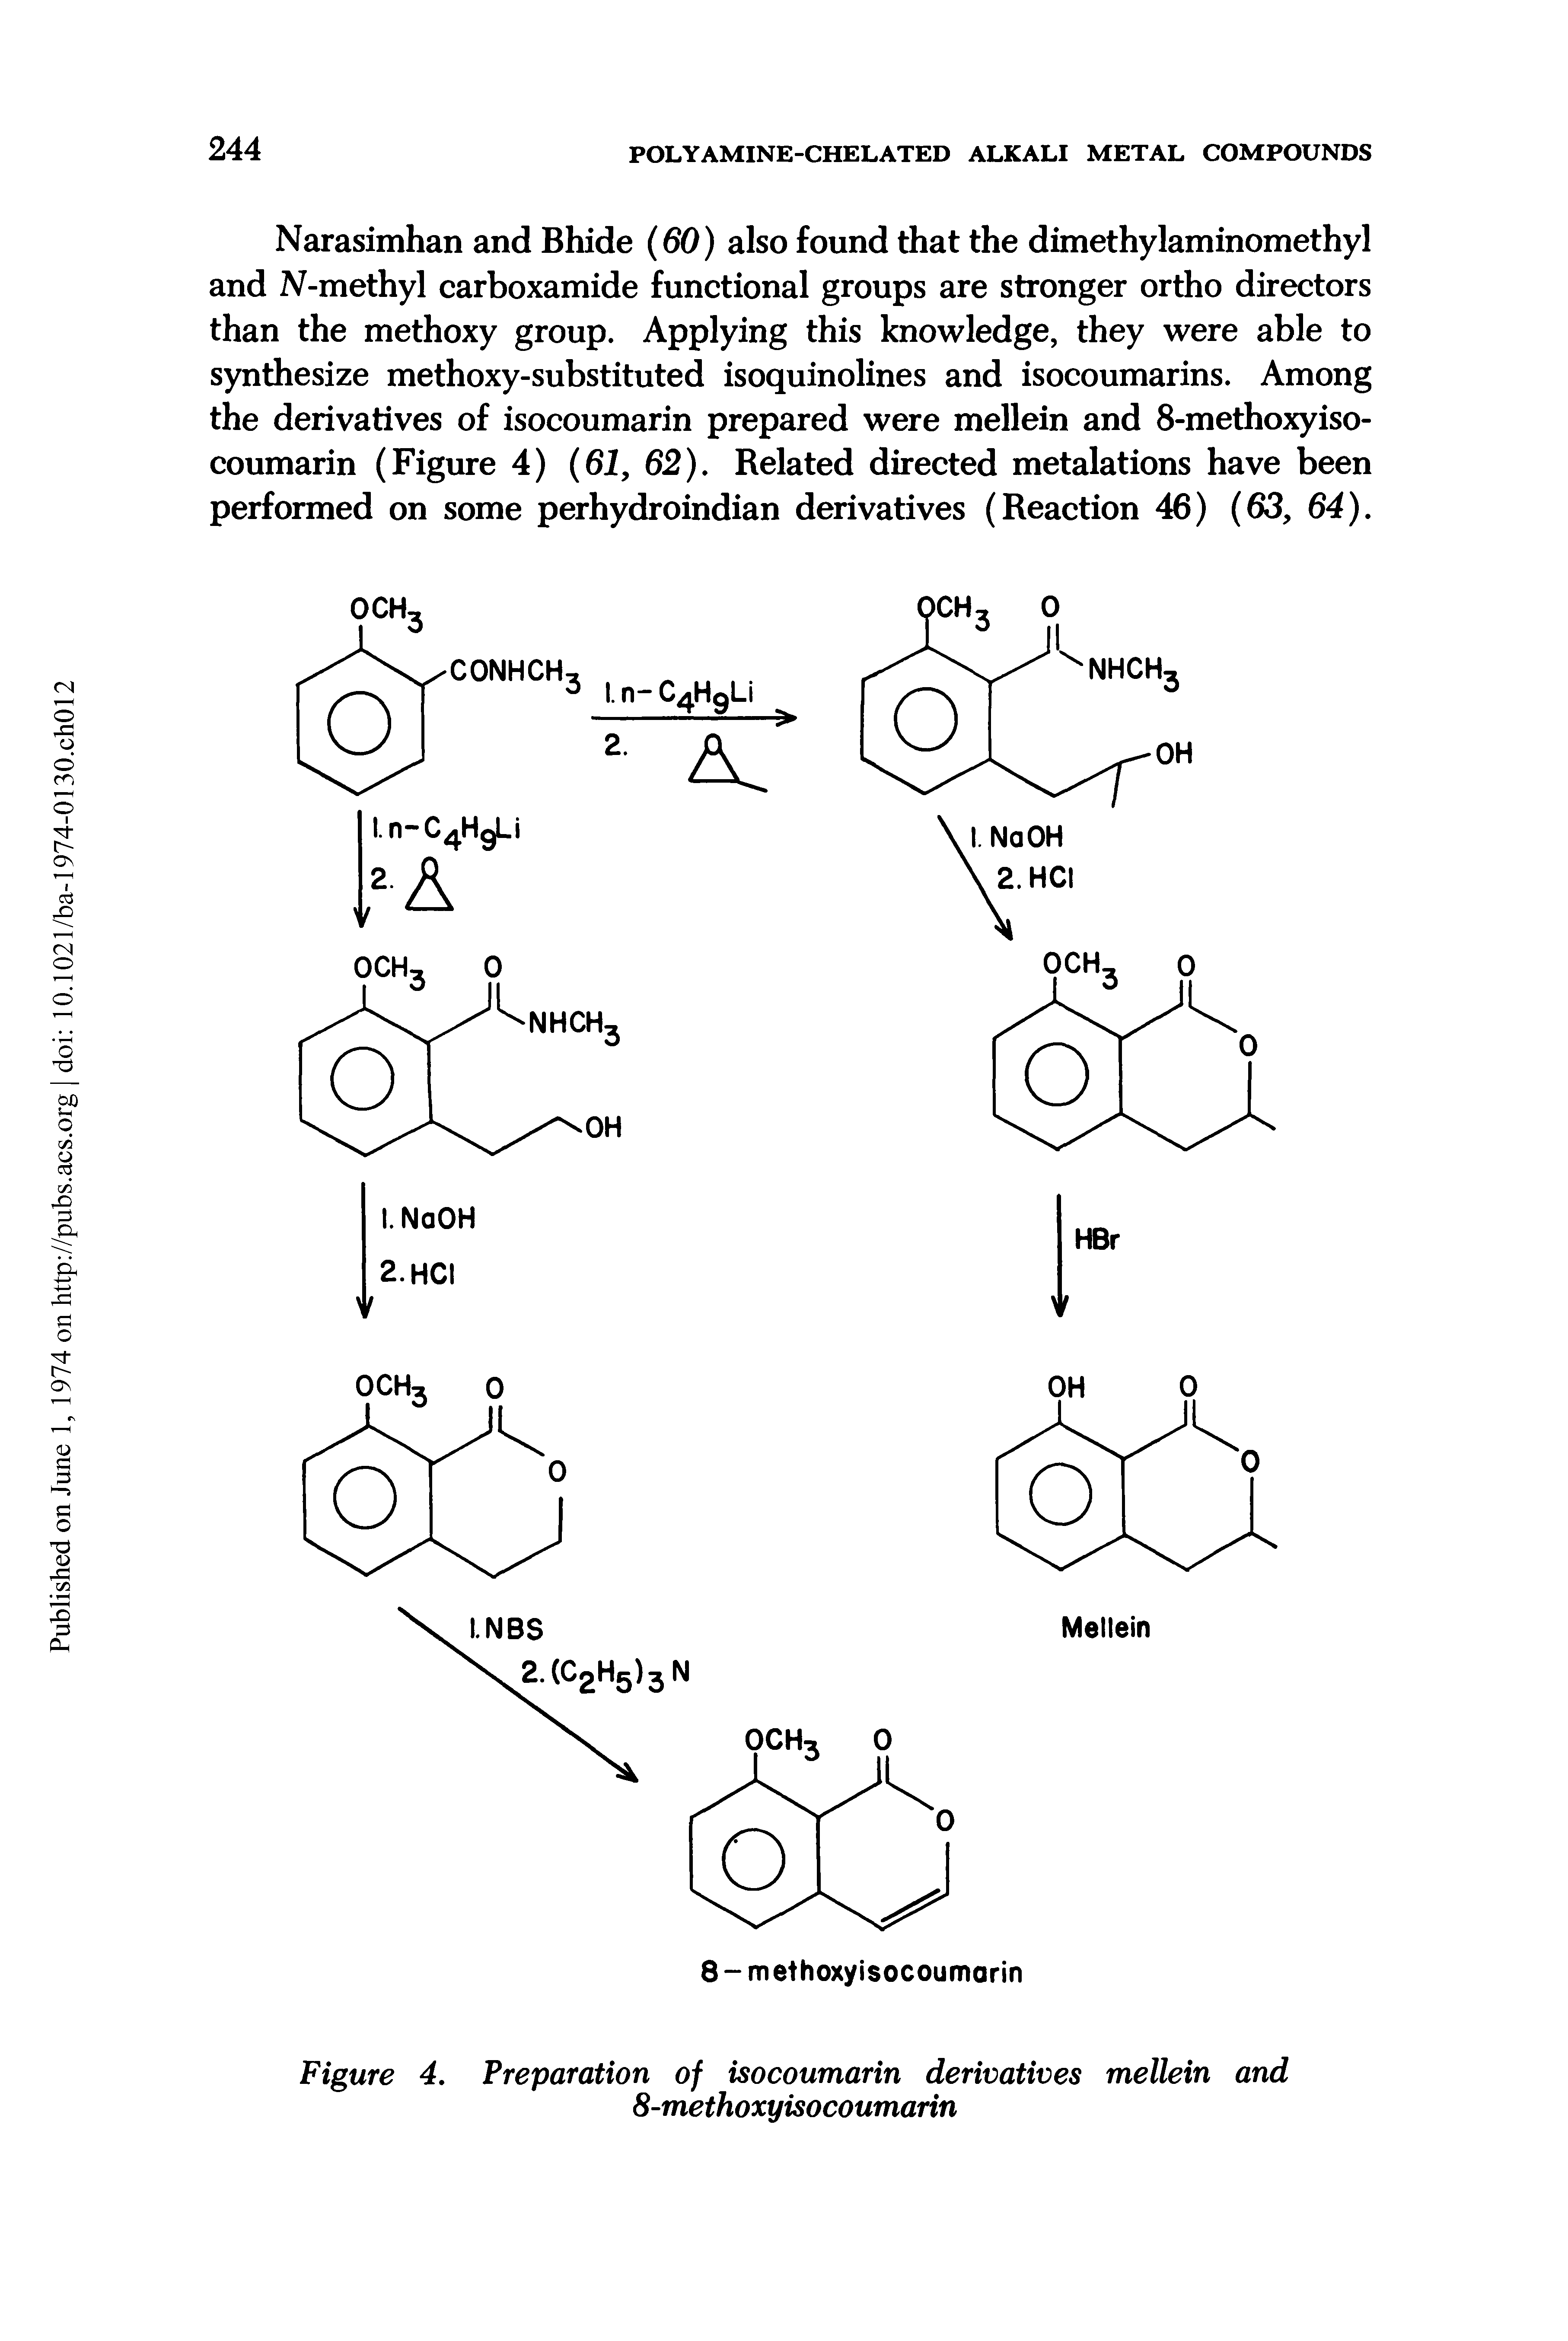 Figure 4, Preparation of isocoumarin derivatives mellein and 8-methoxyisocoumarin...